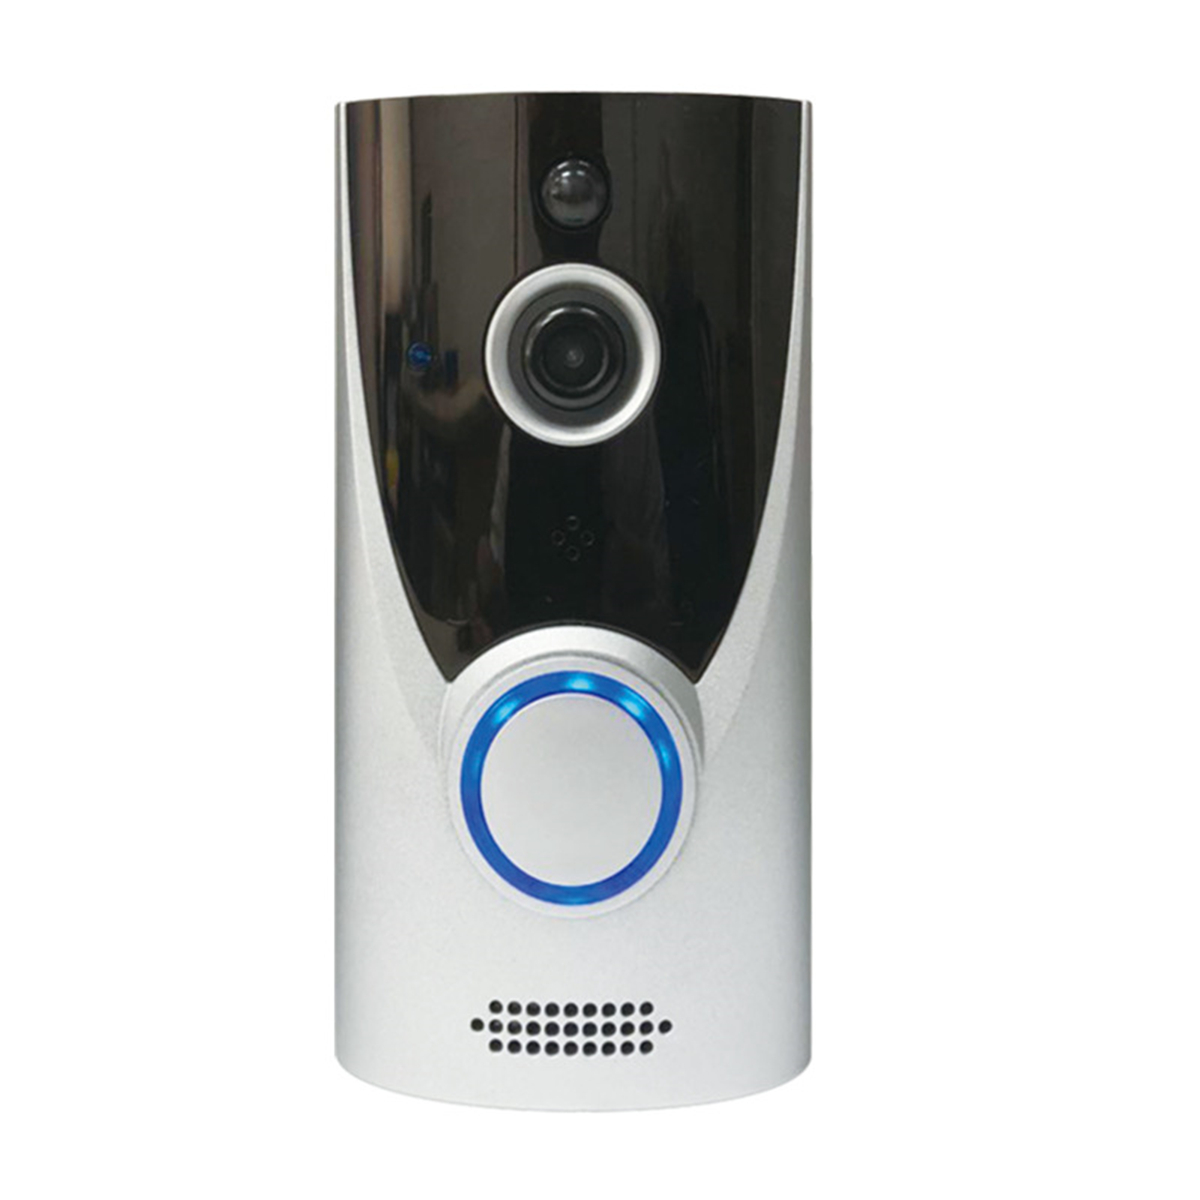 

LK-DB06 1080P Wireless Smart Wifi Video Doorbell Camera Intercom Phone Door Bell Alarm